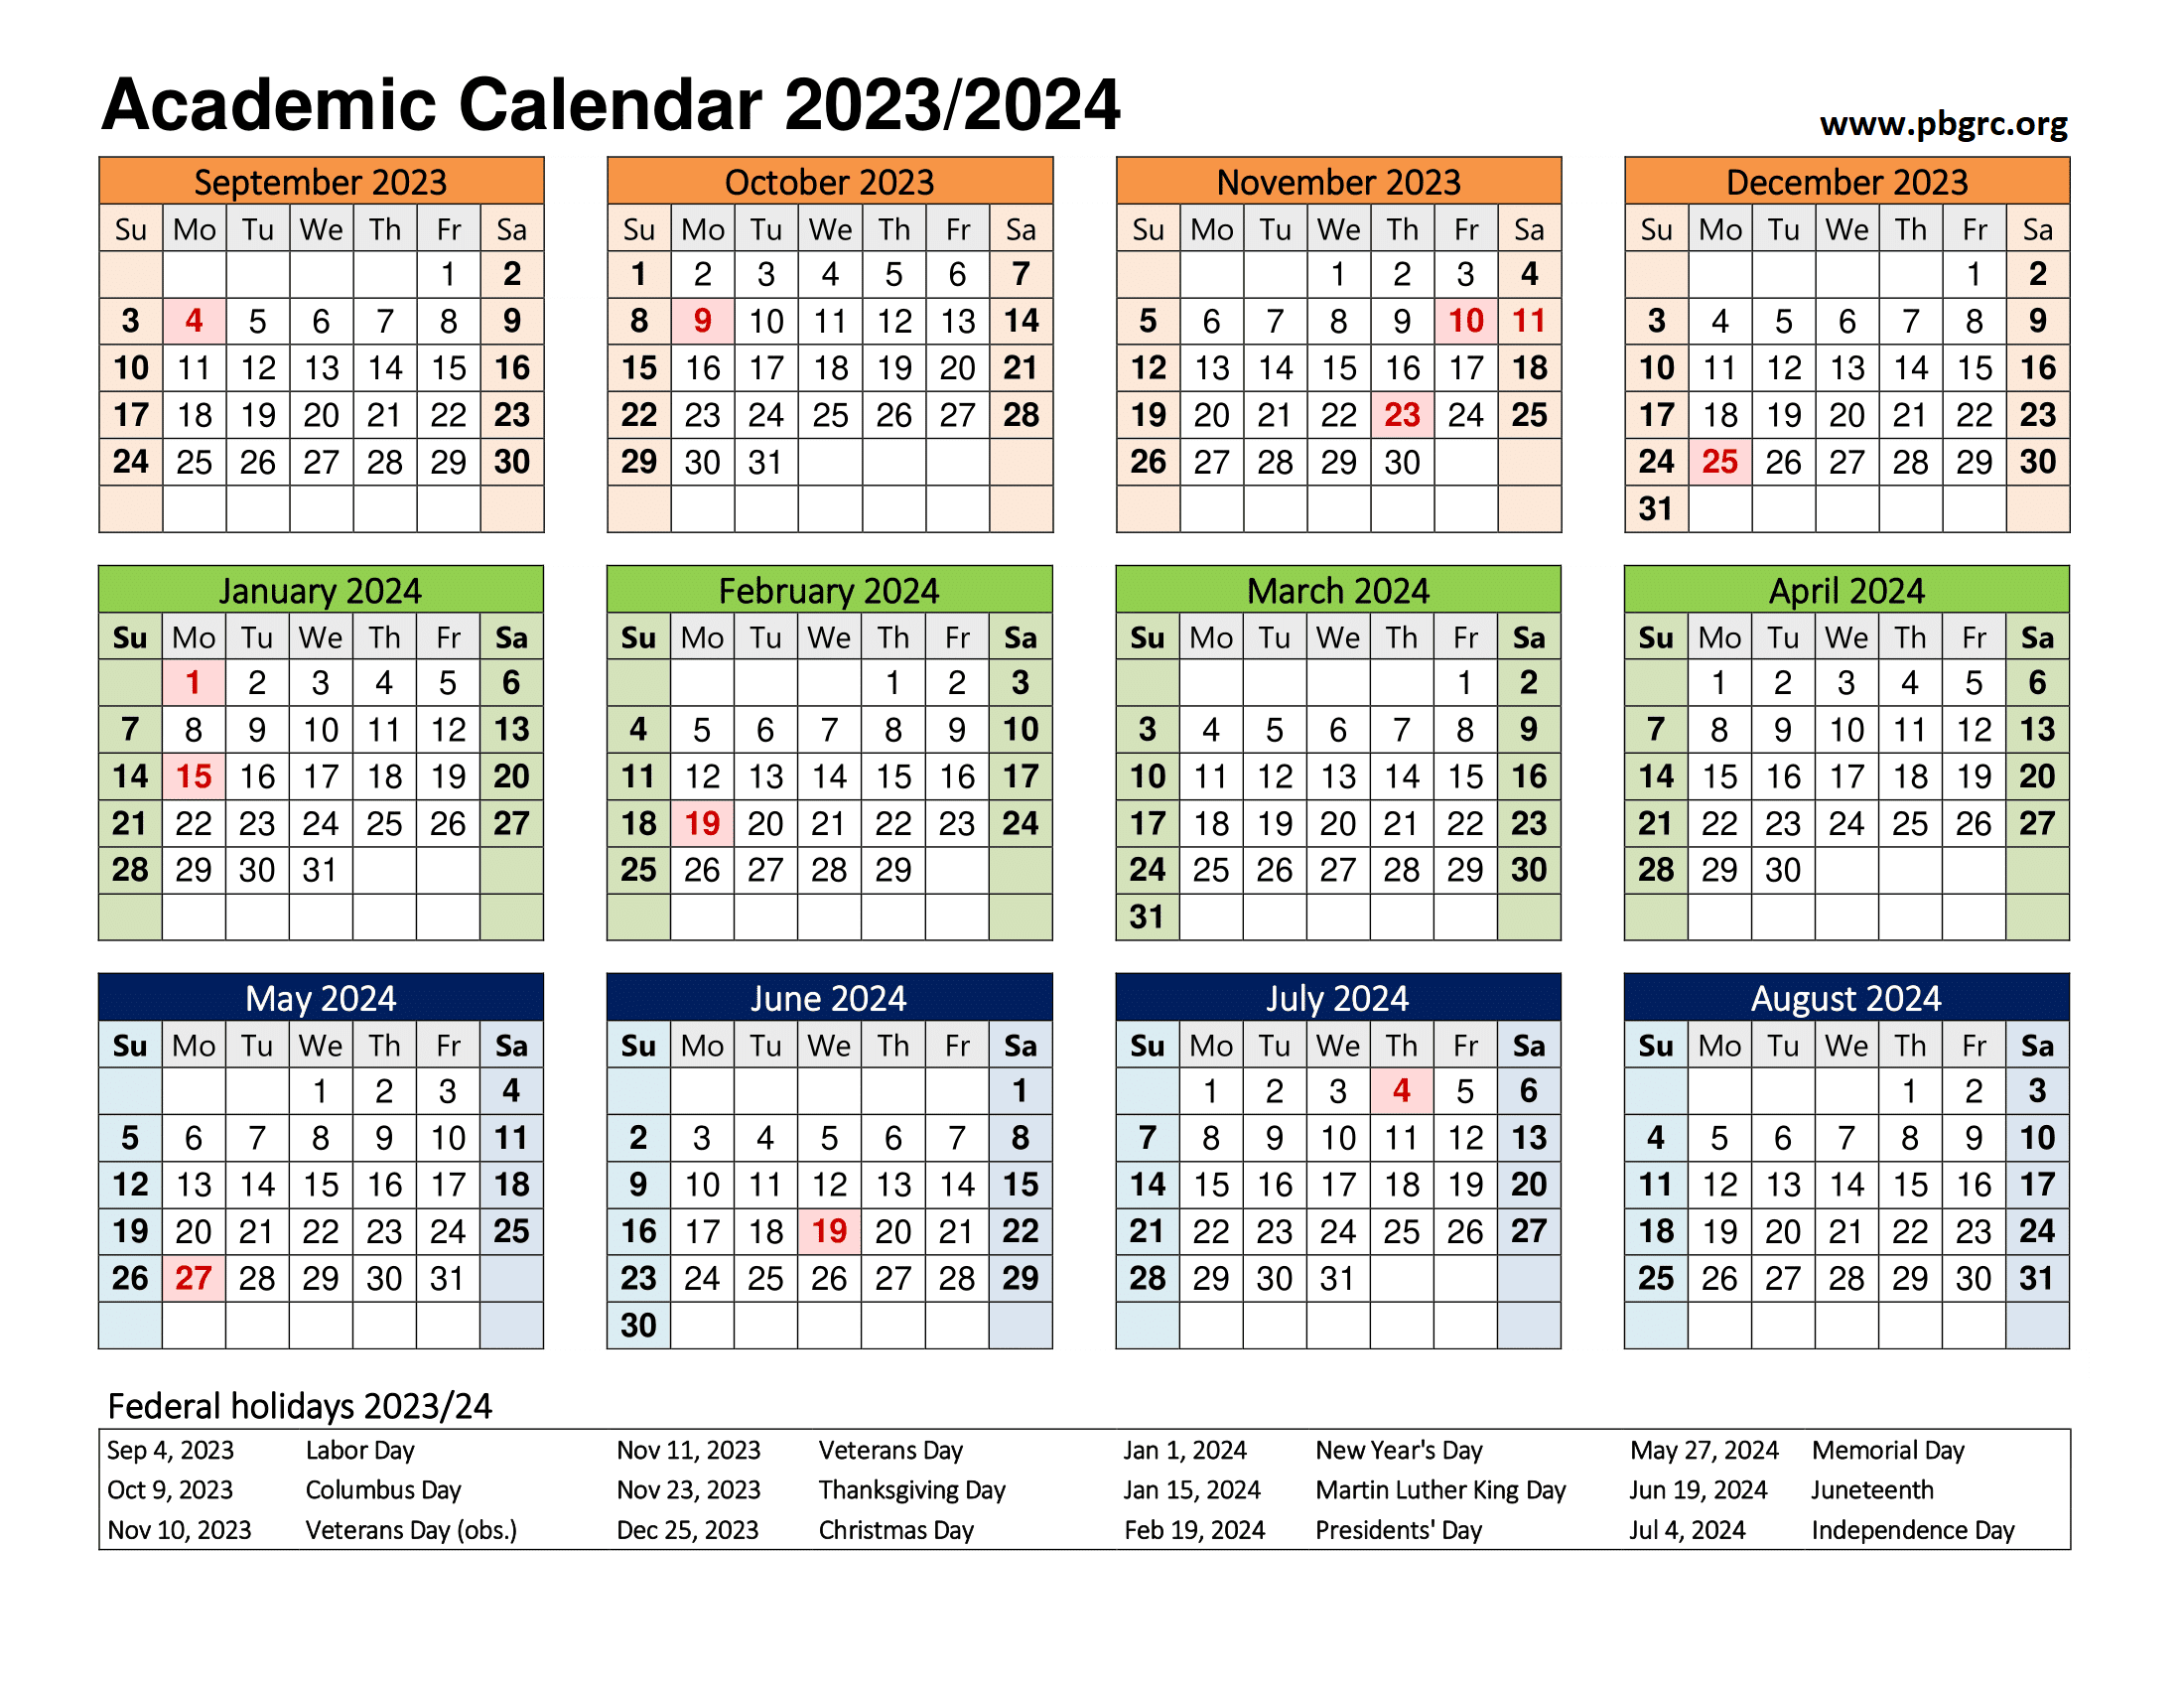 Mizzou Academic Calendar 202425 Marna Sharity